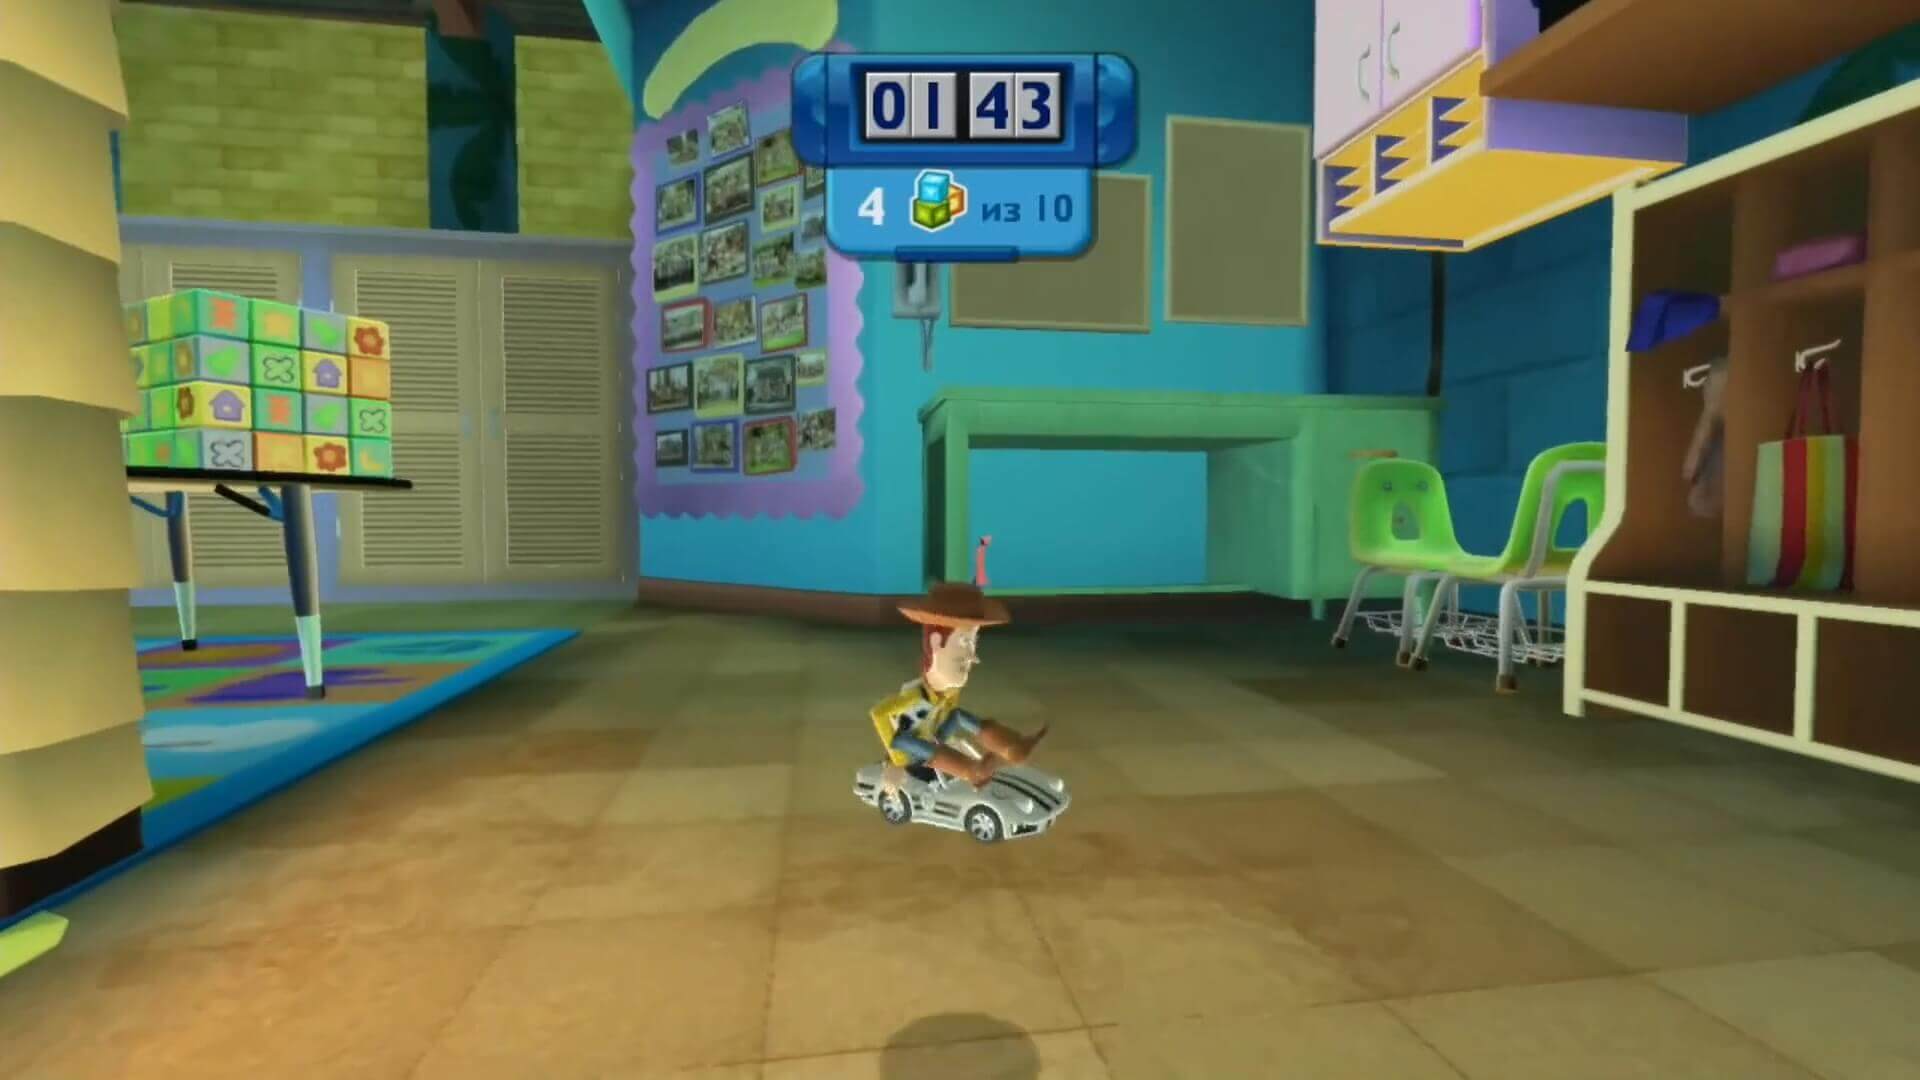 Toy Story 3 The Video Game - геймплей игры Windows